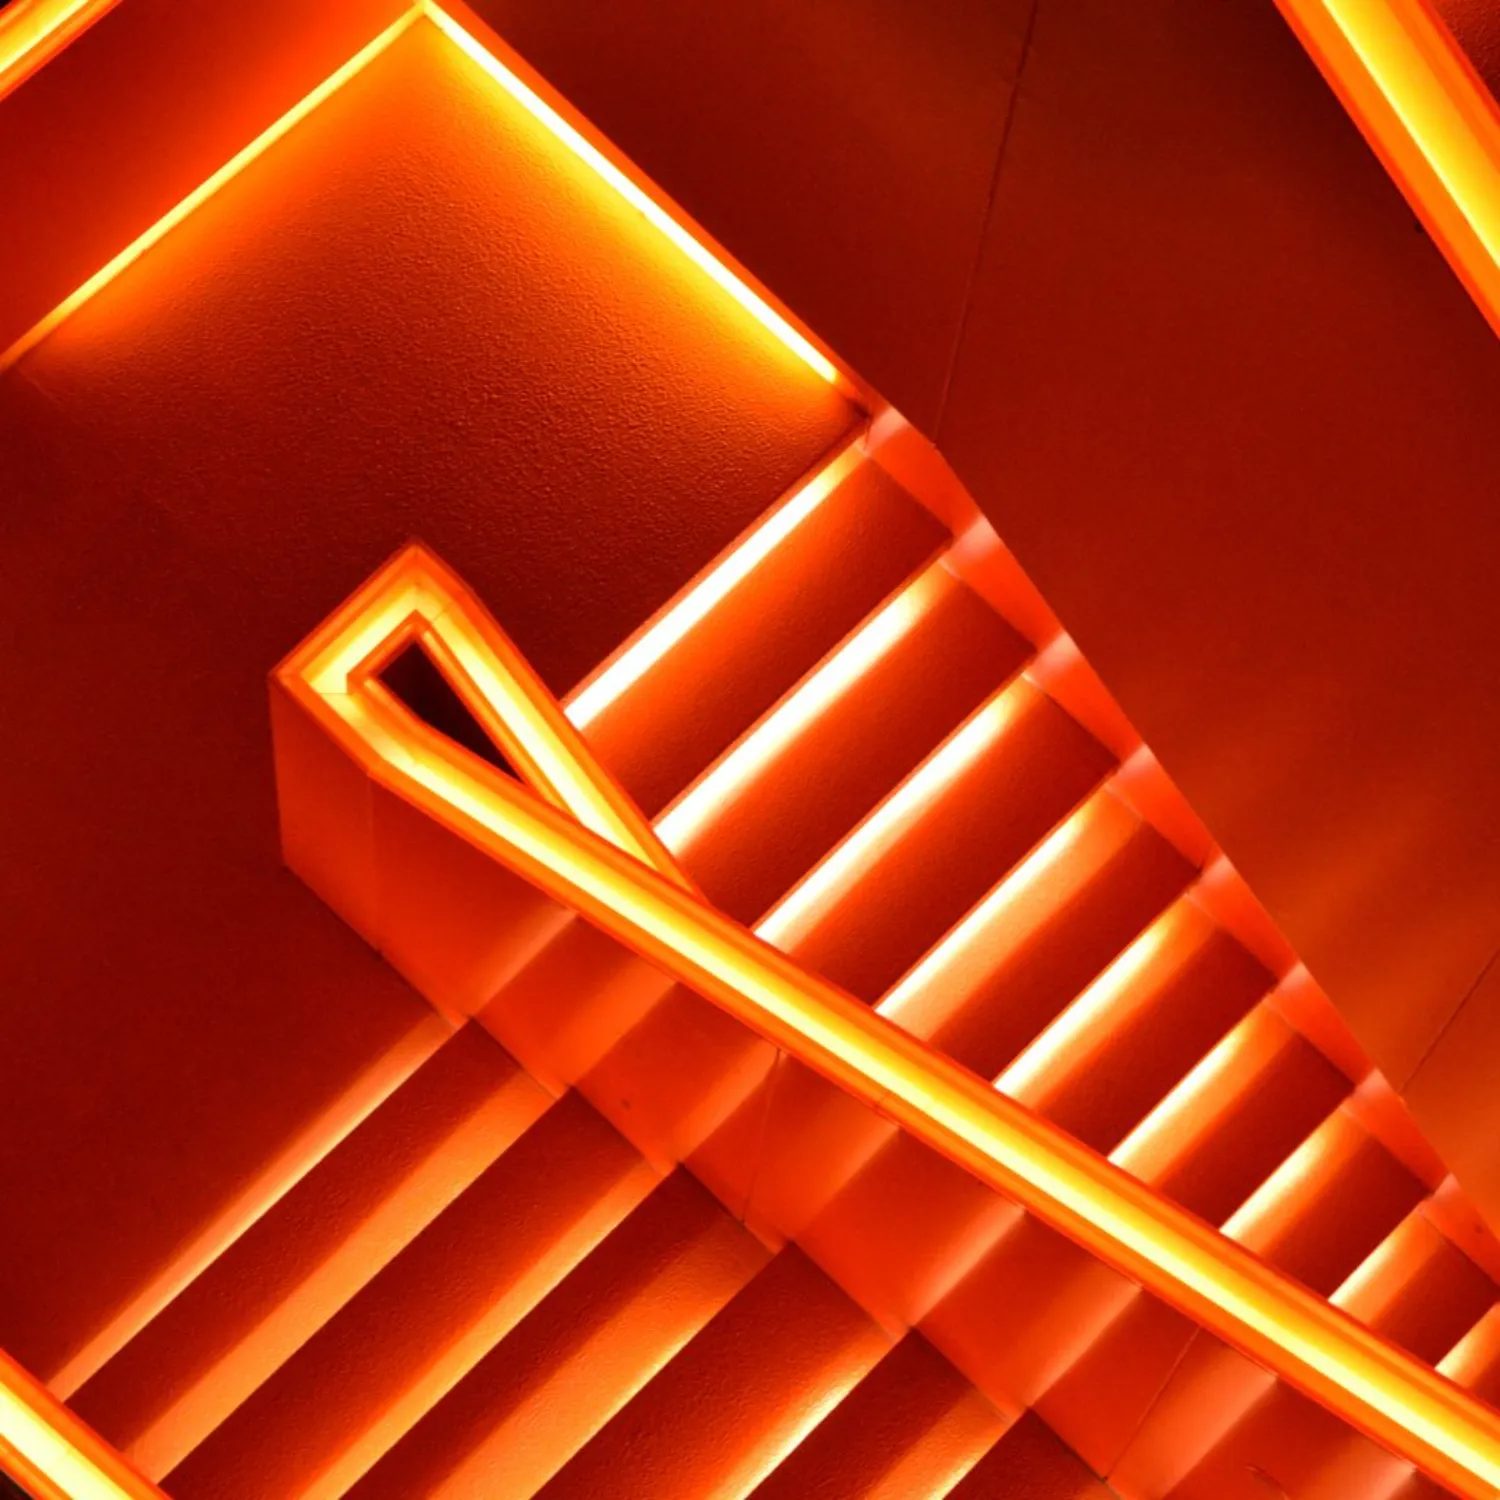 Escaleras naranjas iluminadas con tiras led personalizadas